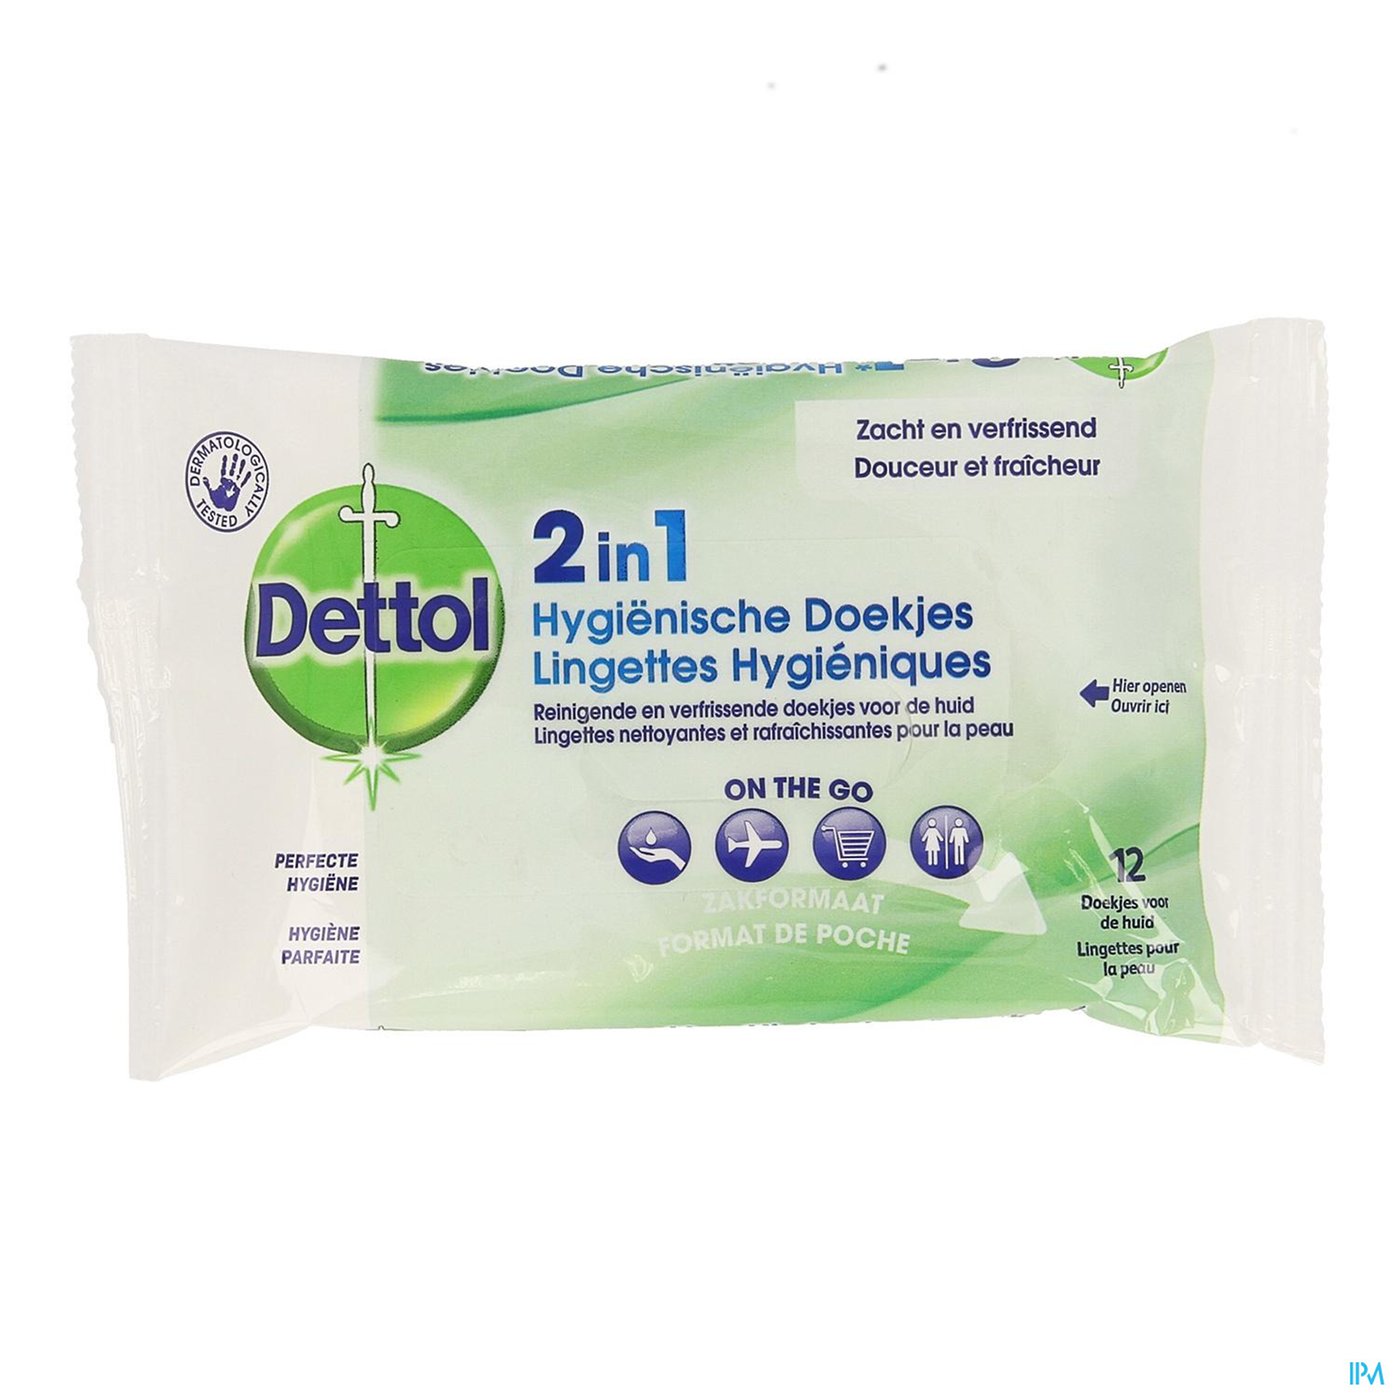 Dettol 2in1 Hygienische Doekjes 12 packshot